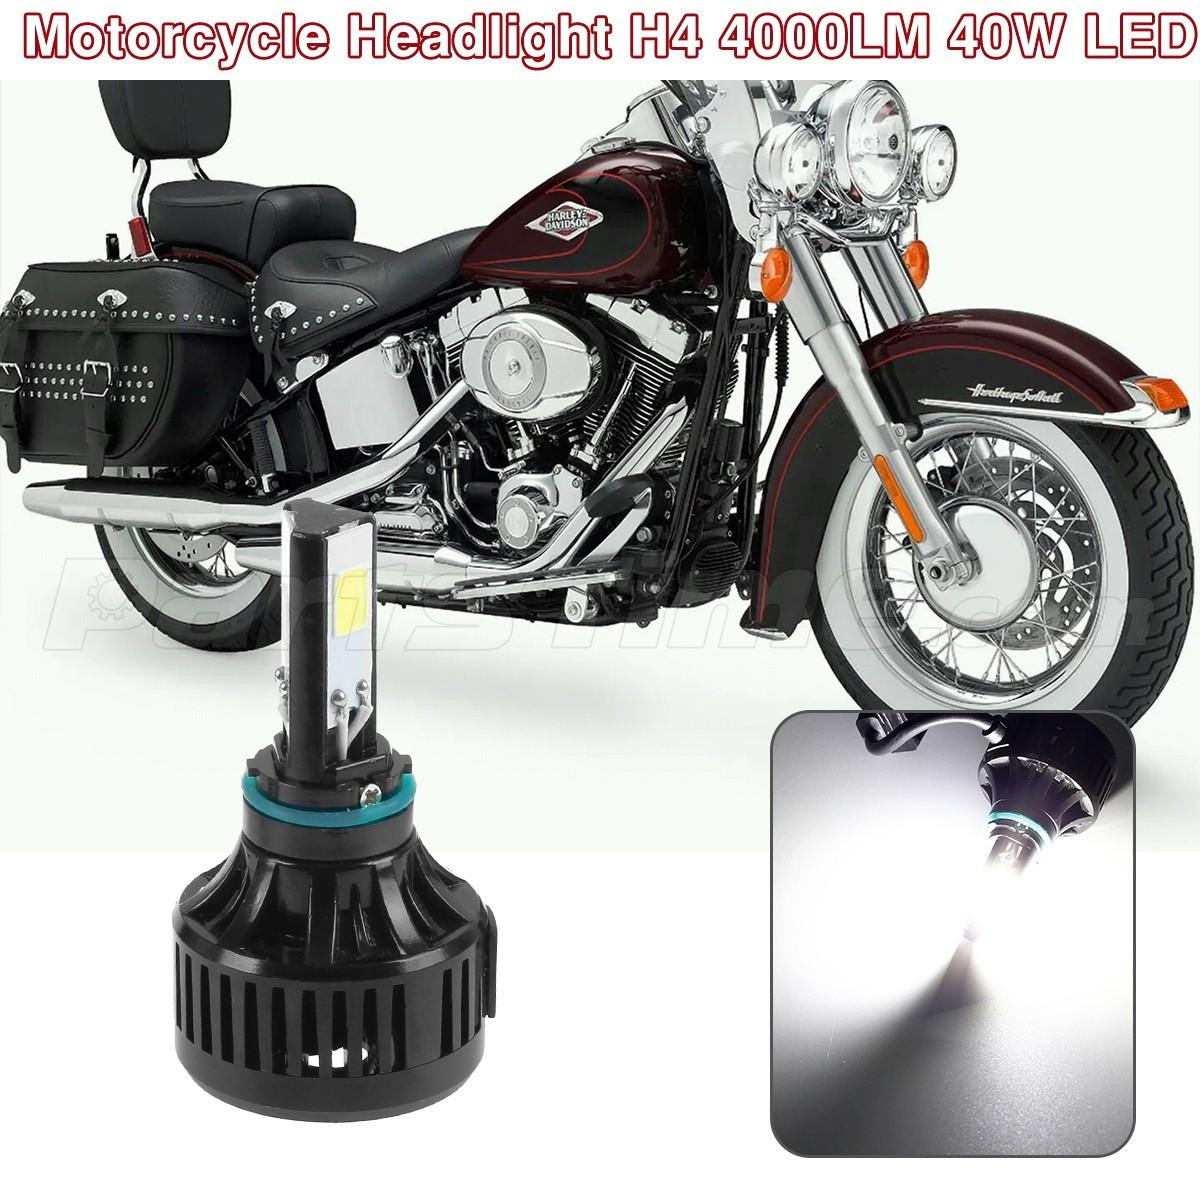 Motorcycle Headlight Wiring Diagram - Wiring Diagrams